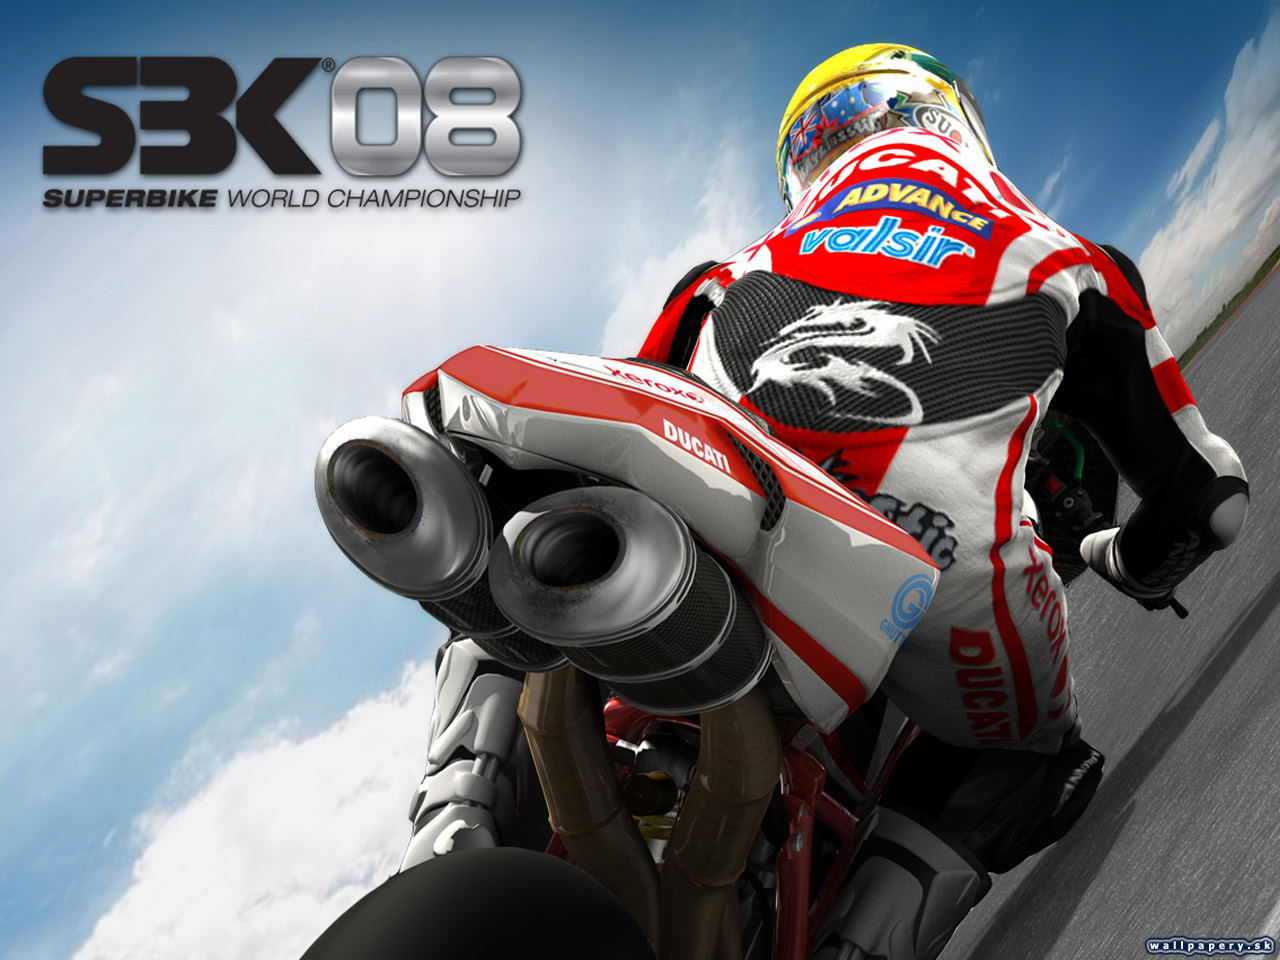 SBK-08: Superbike World Championship - wallpaper 1